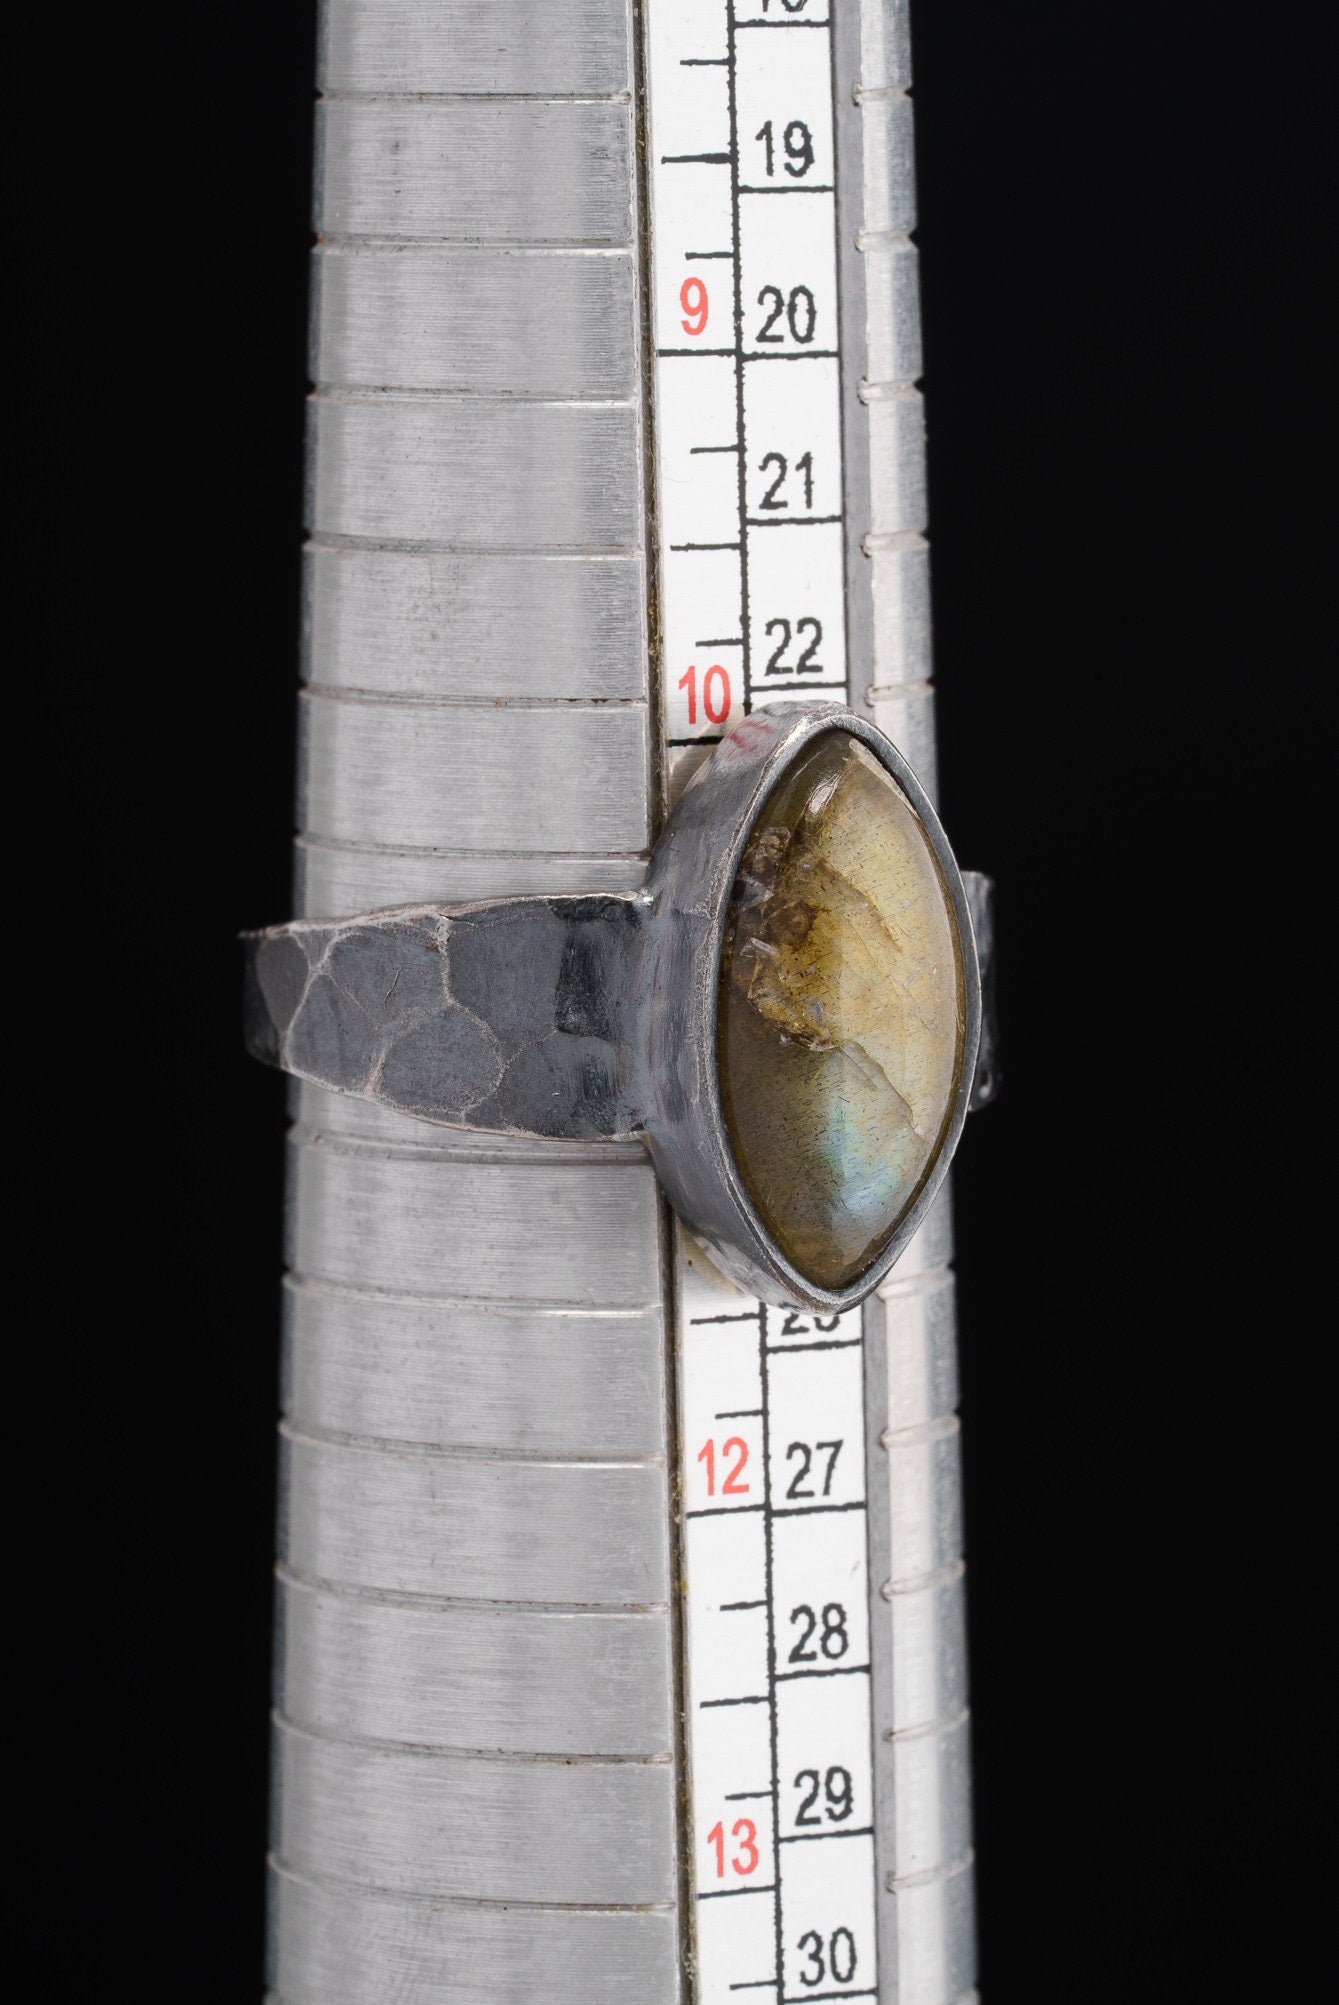 Cat Eye Labradorite - Unisex / Men - Large Crystal Ring - Size 10.5 US - 925 Sterling Silver - Hammer Textured & Oxidised